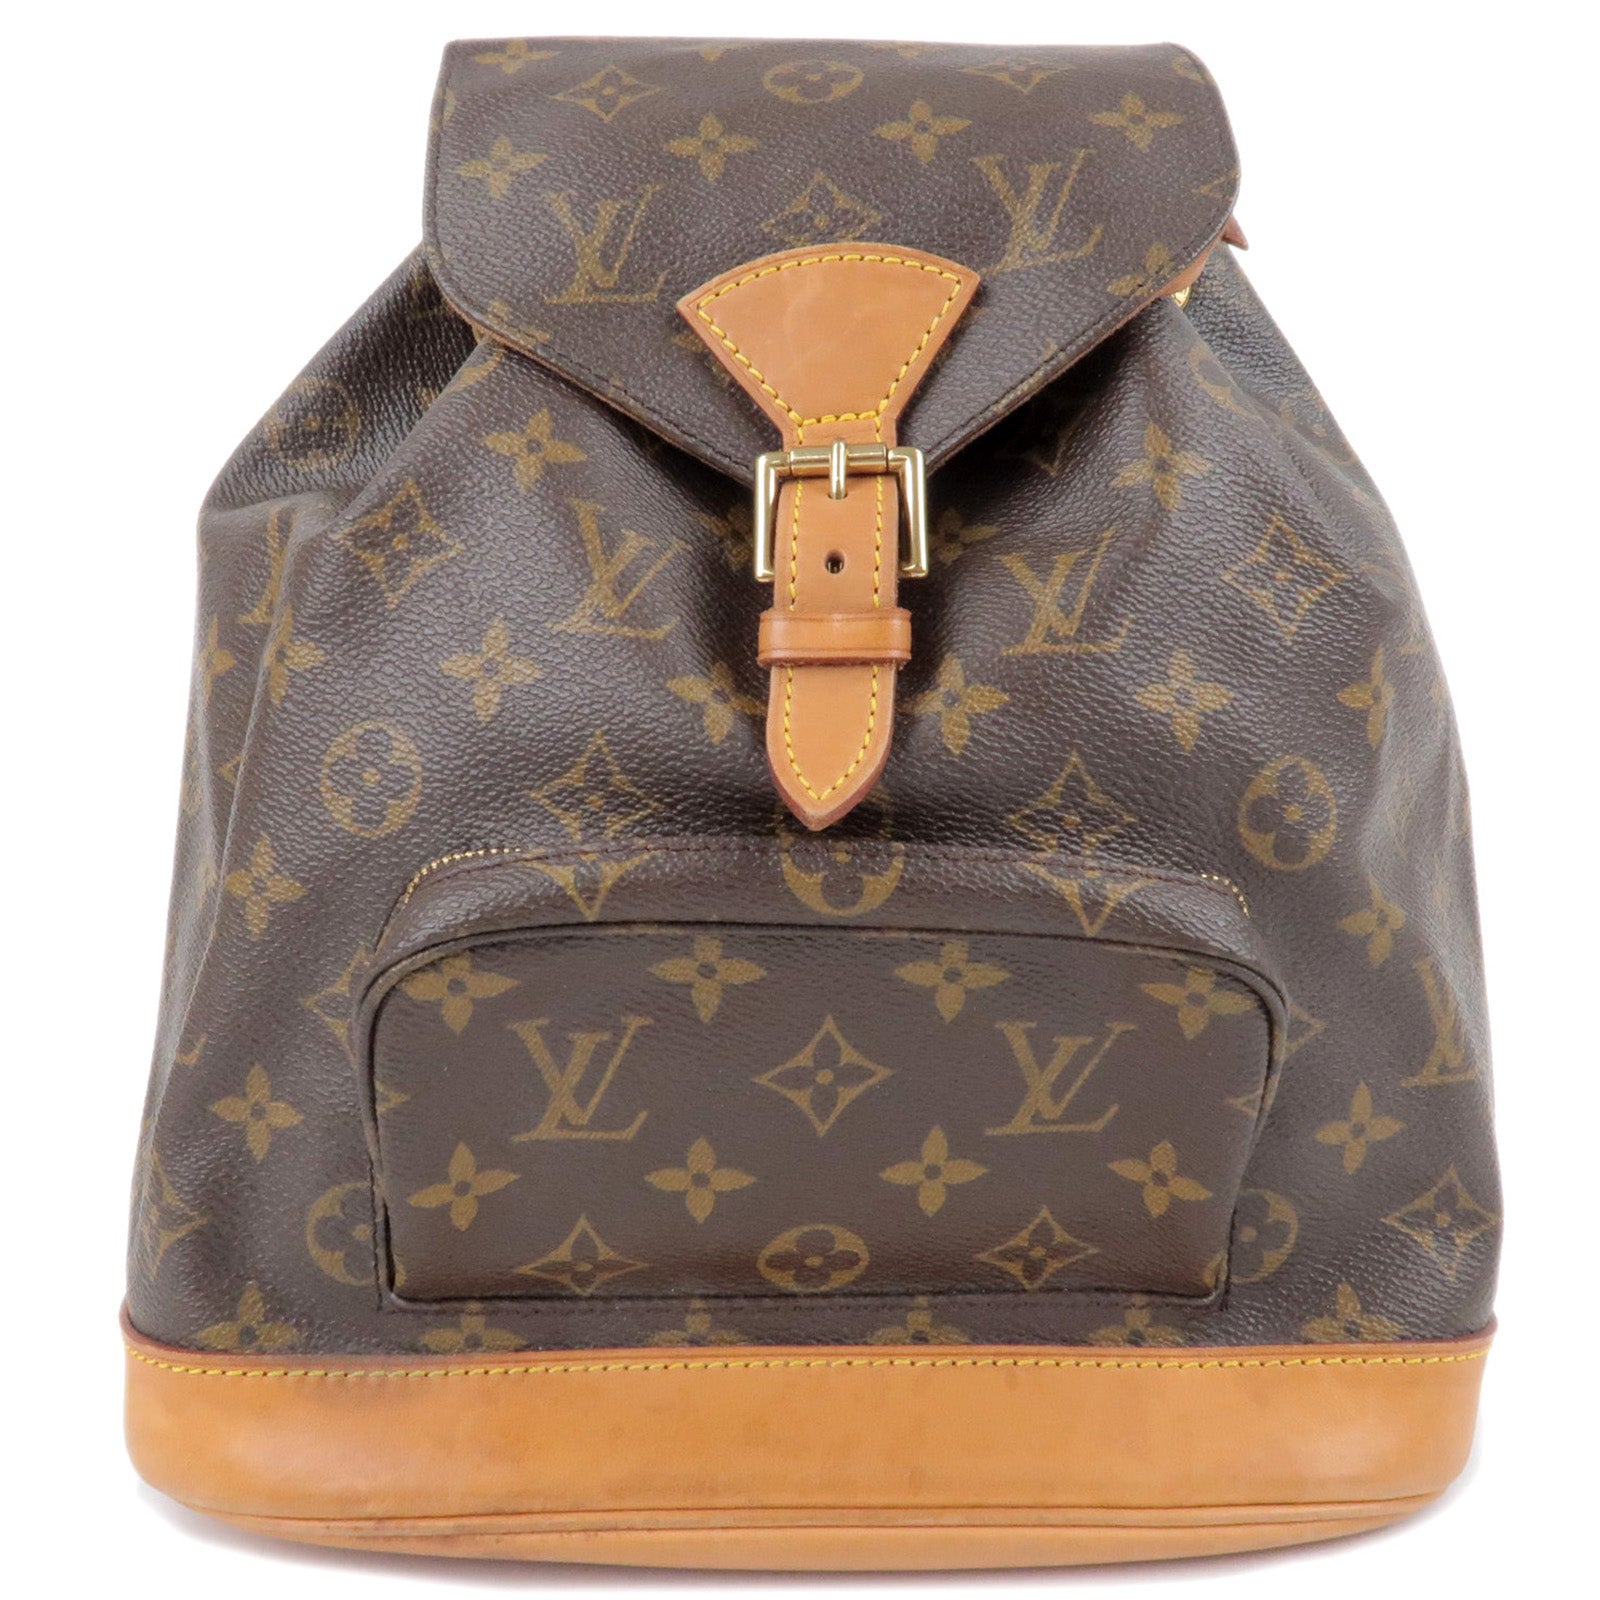 LOUIS VUITTON Capucines MM Black Bag Shoulder Luxury Handbag in excellent  shape!